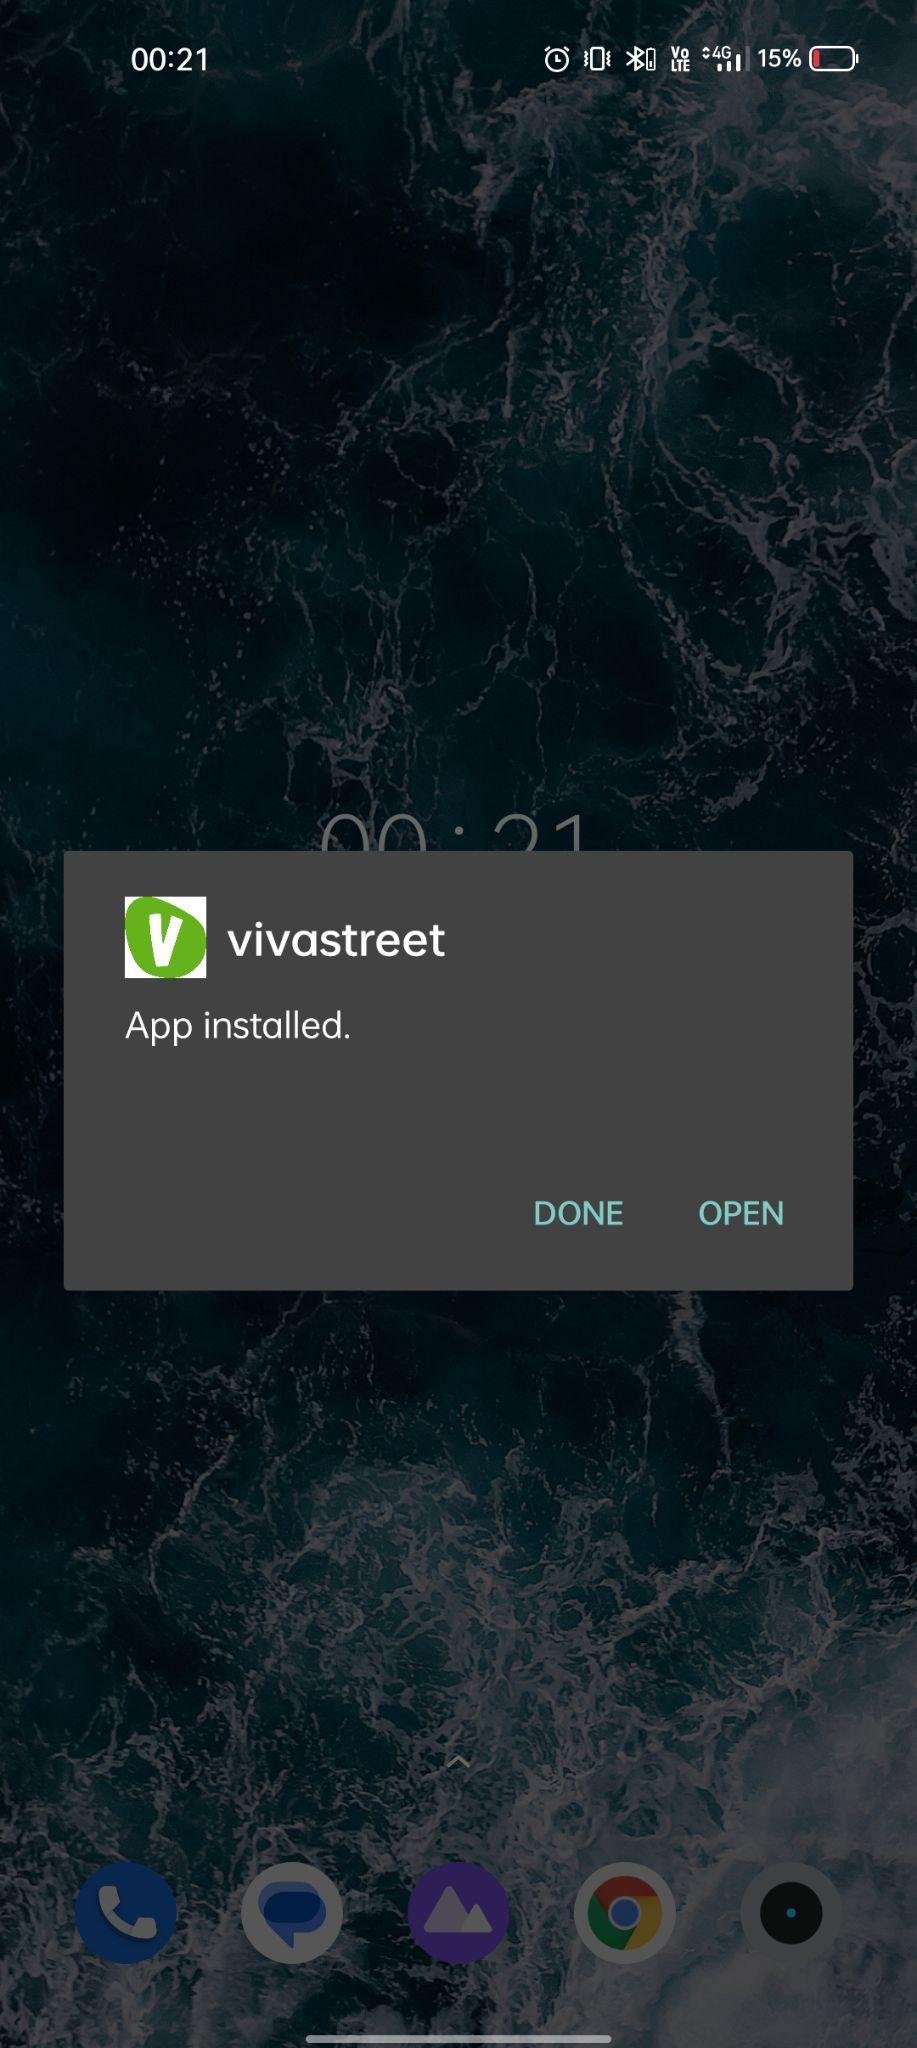 vivastreet apk installed